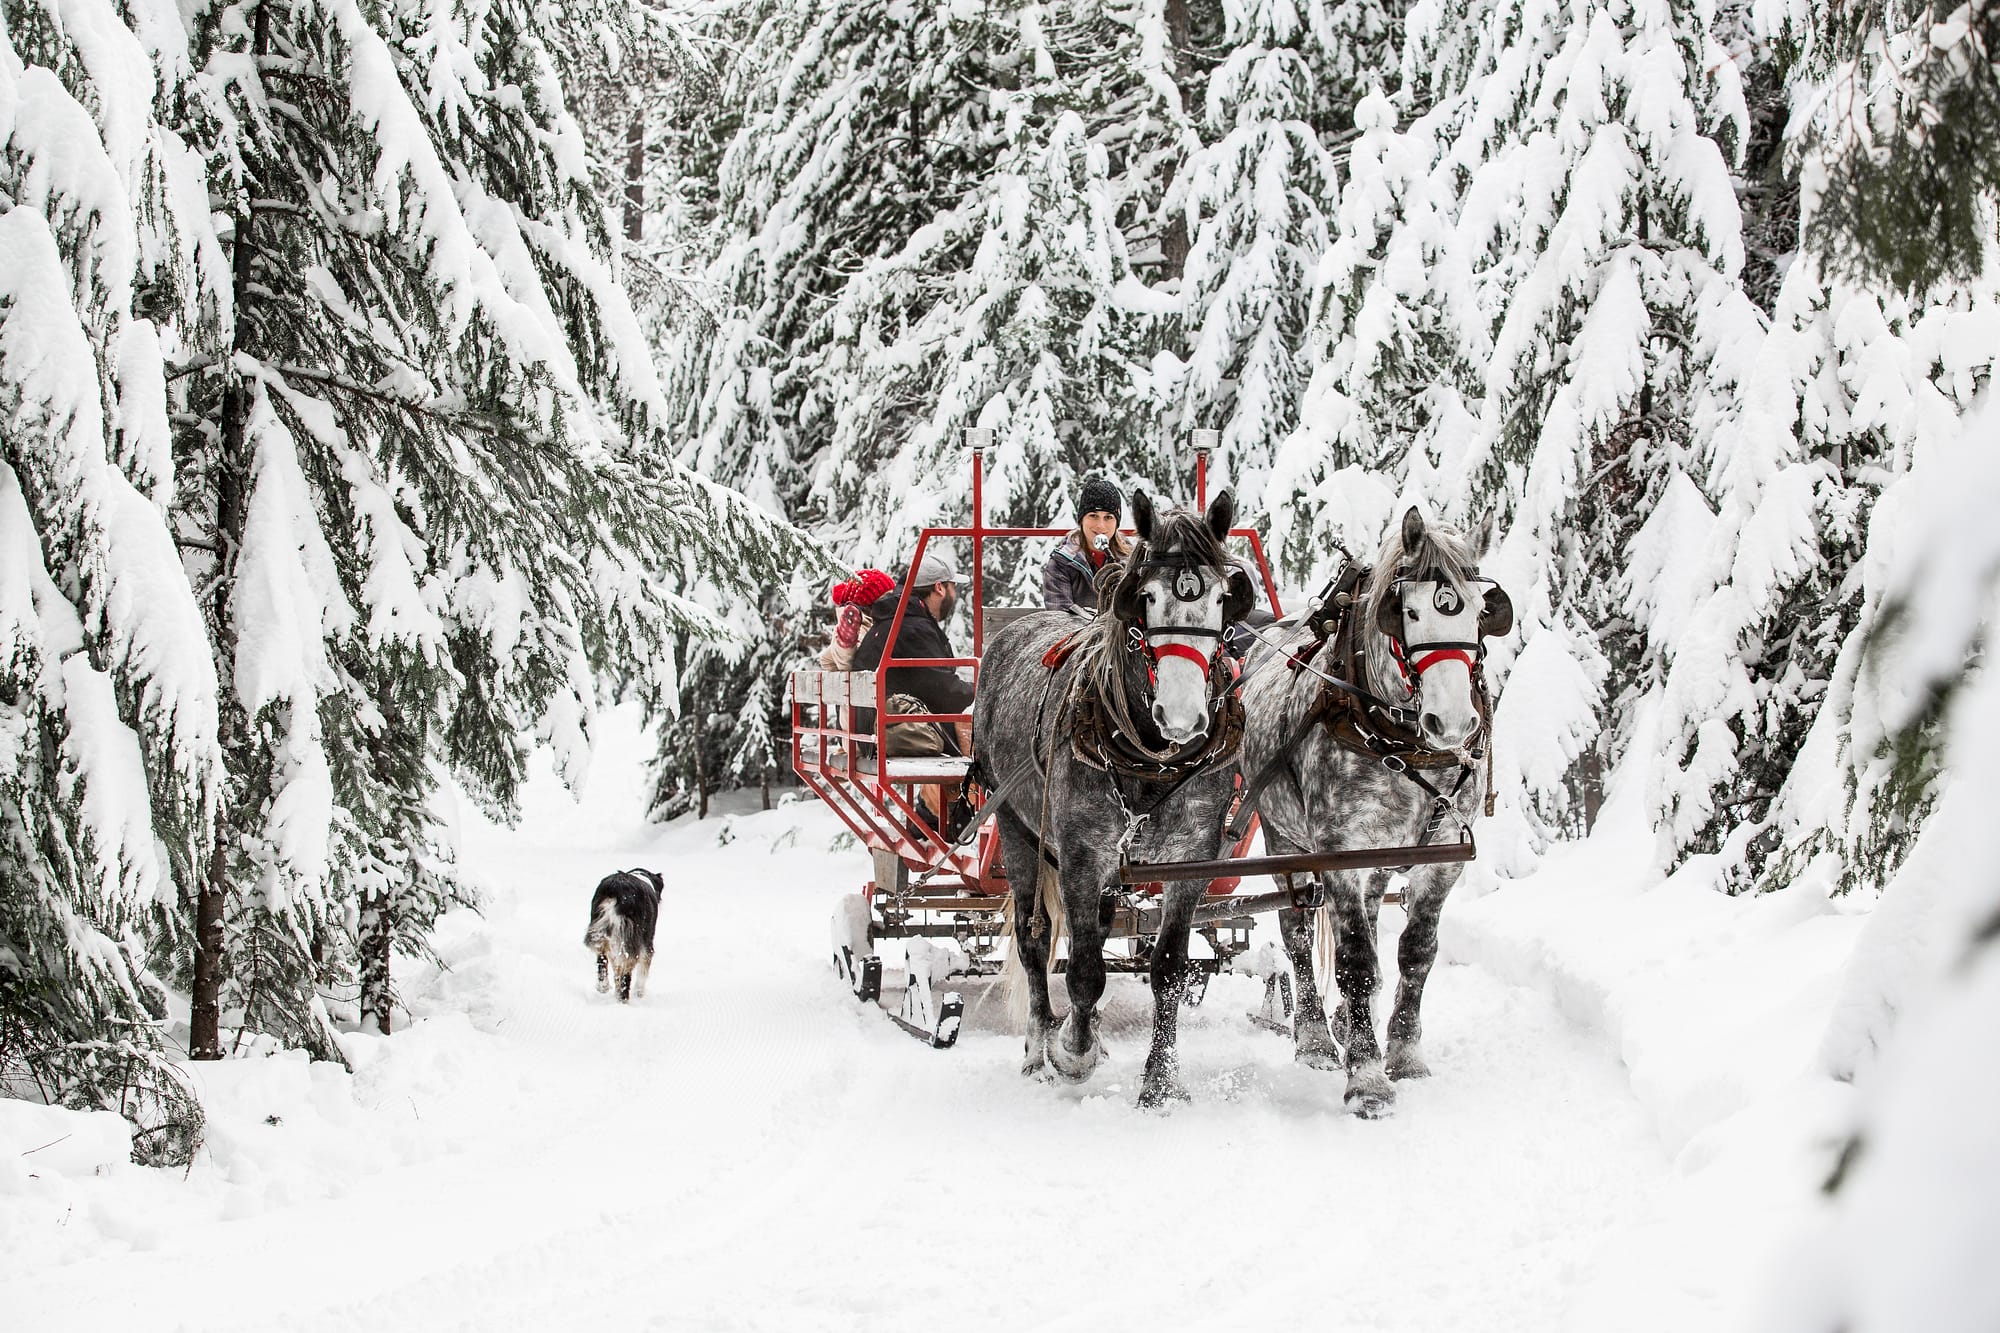 Sleigh Ride through a winter wonderland snow covered forest